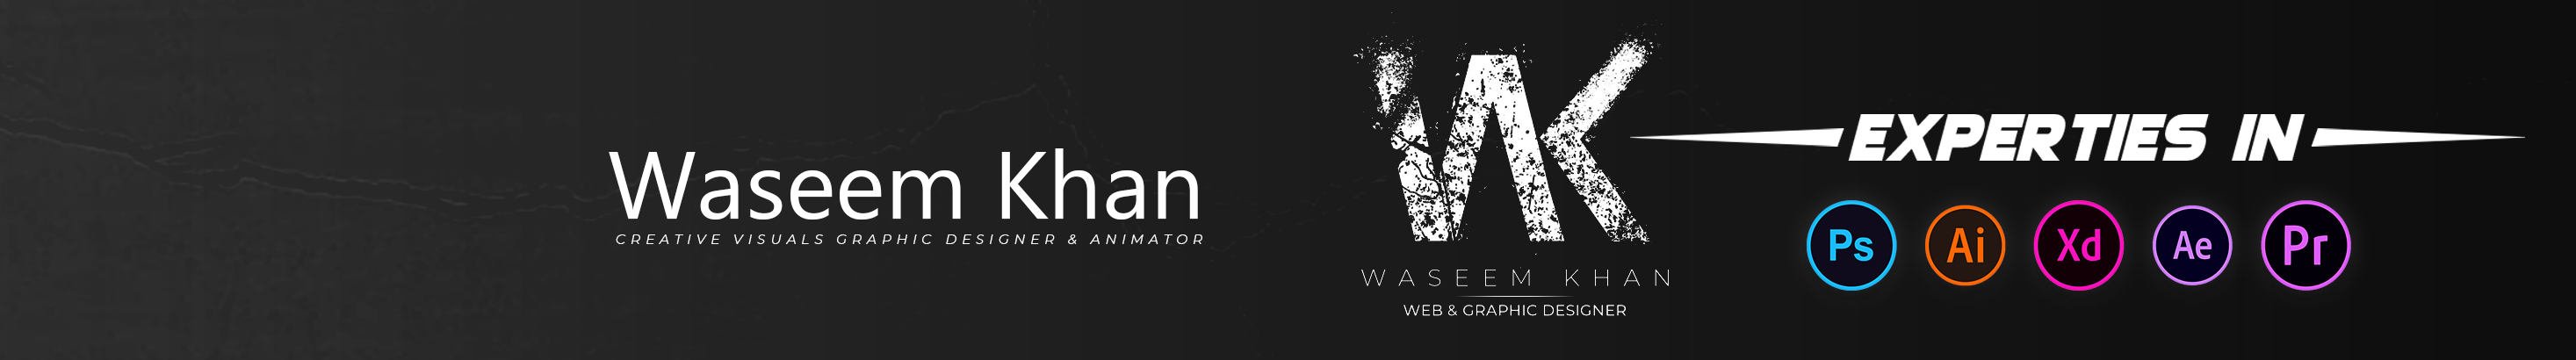 Waseem Khan's profile banner